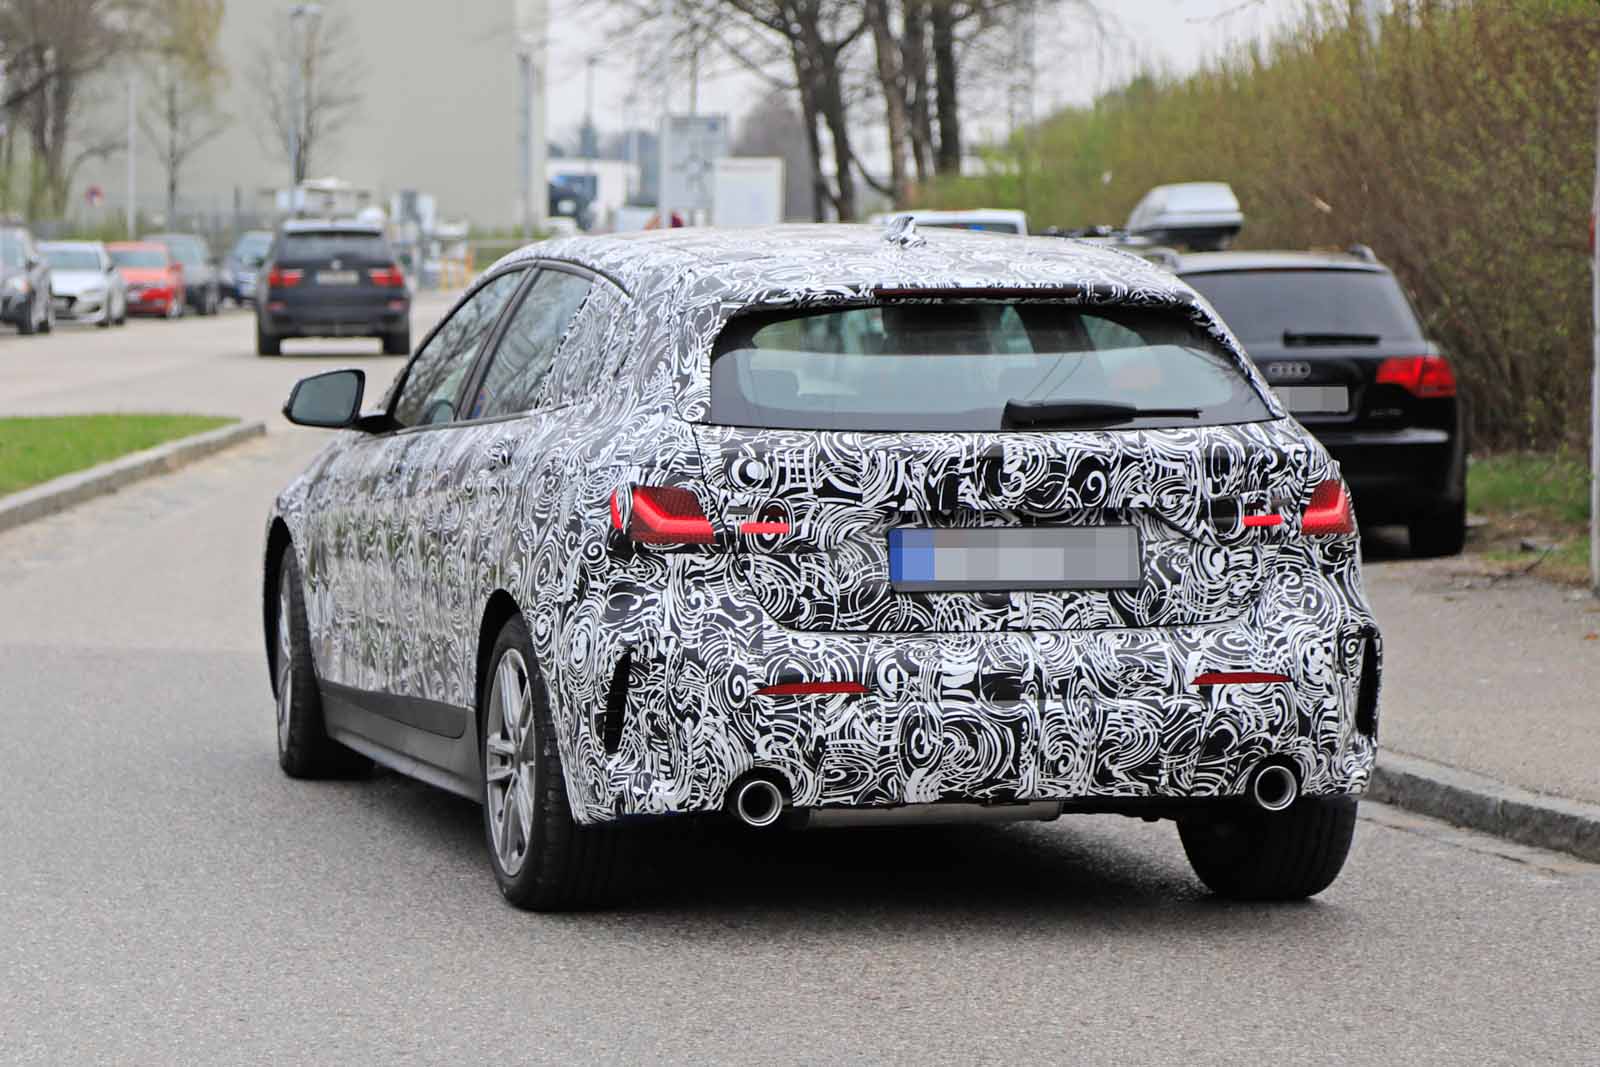 New 2019 BMW 1 Series: latest spyshots and full range breakdown